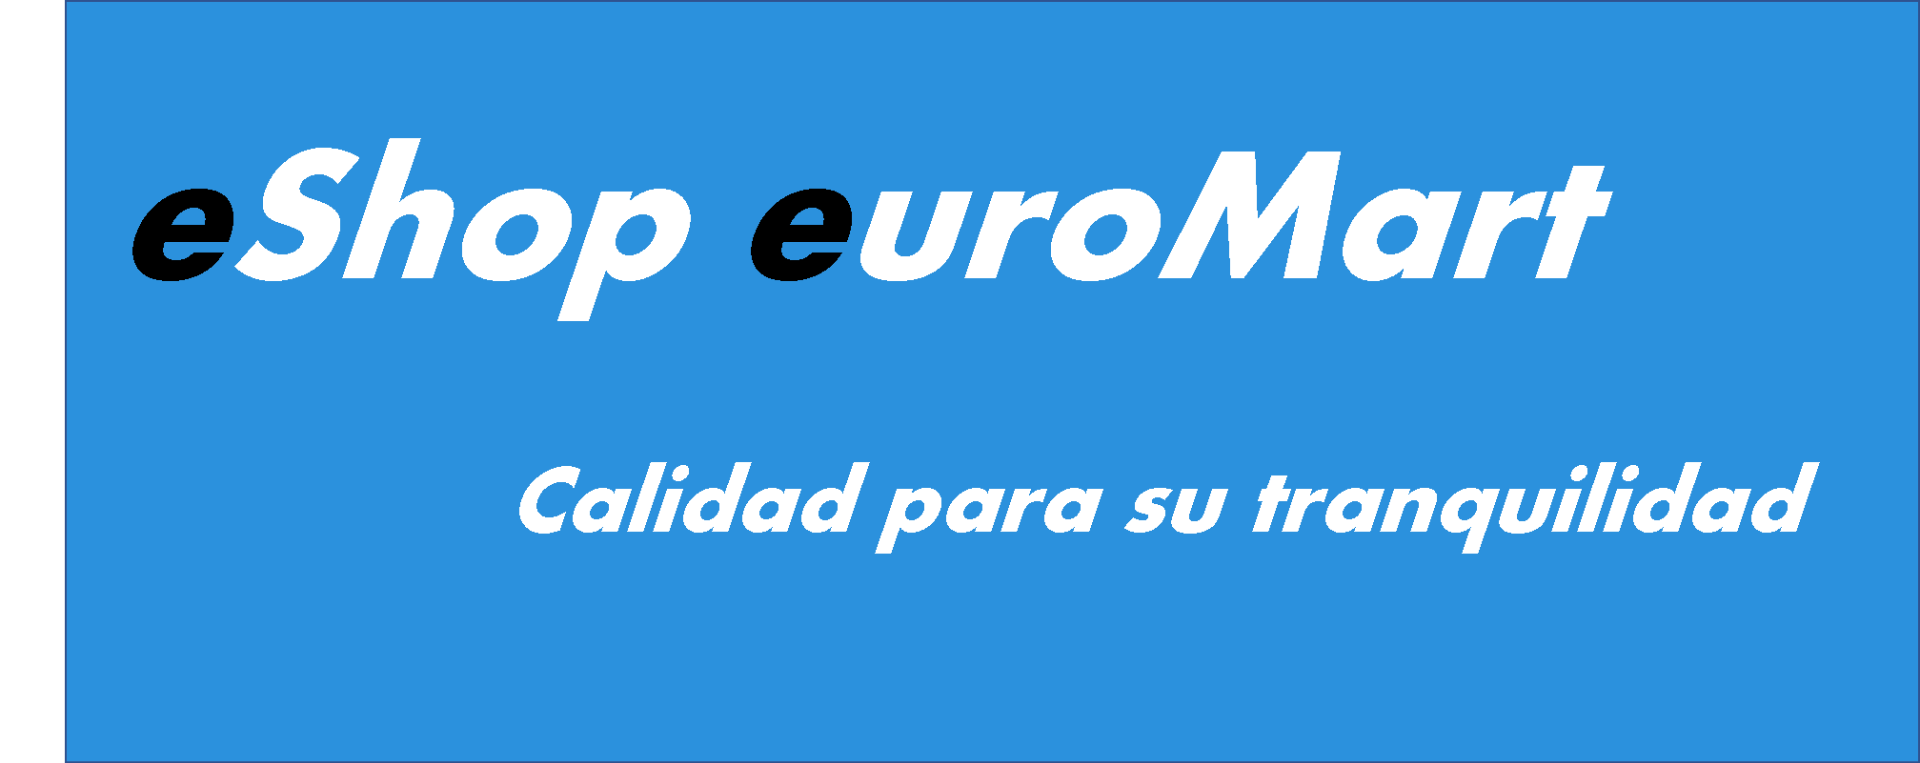 eShop euroMart